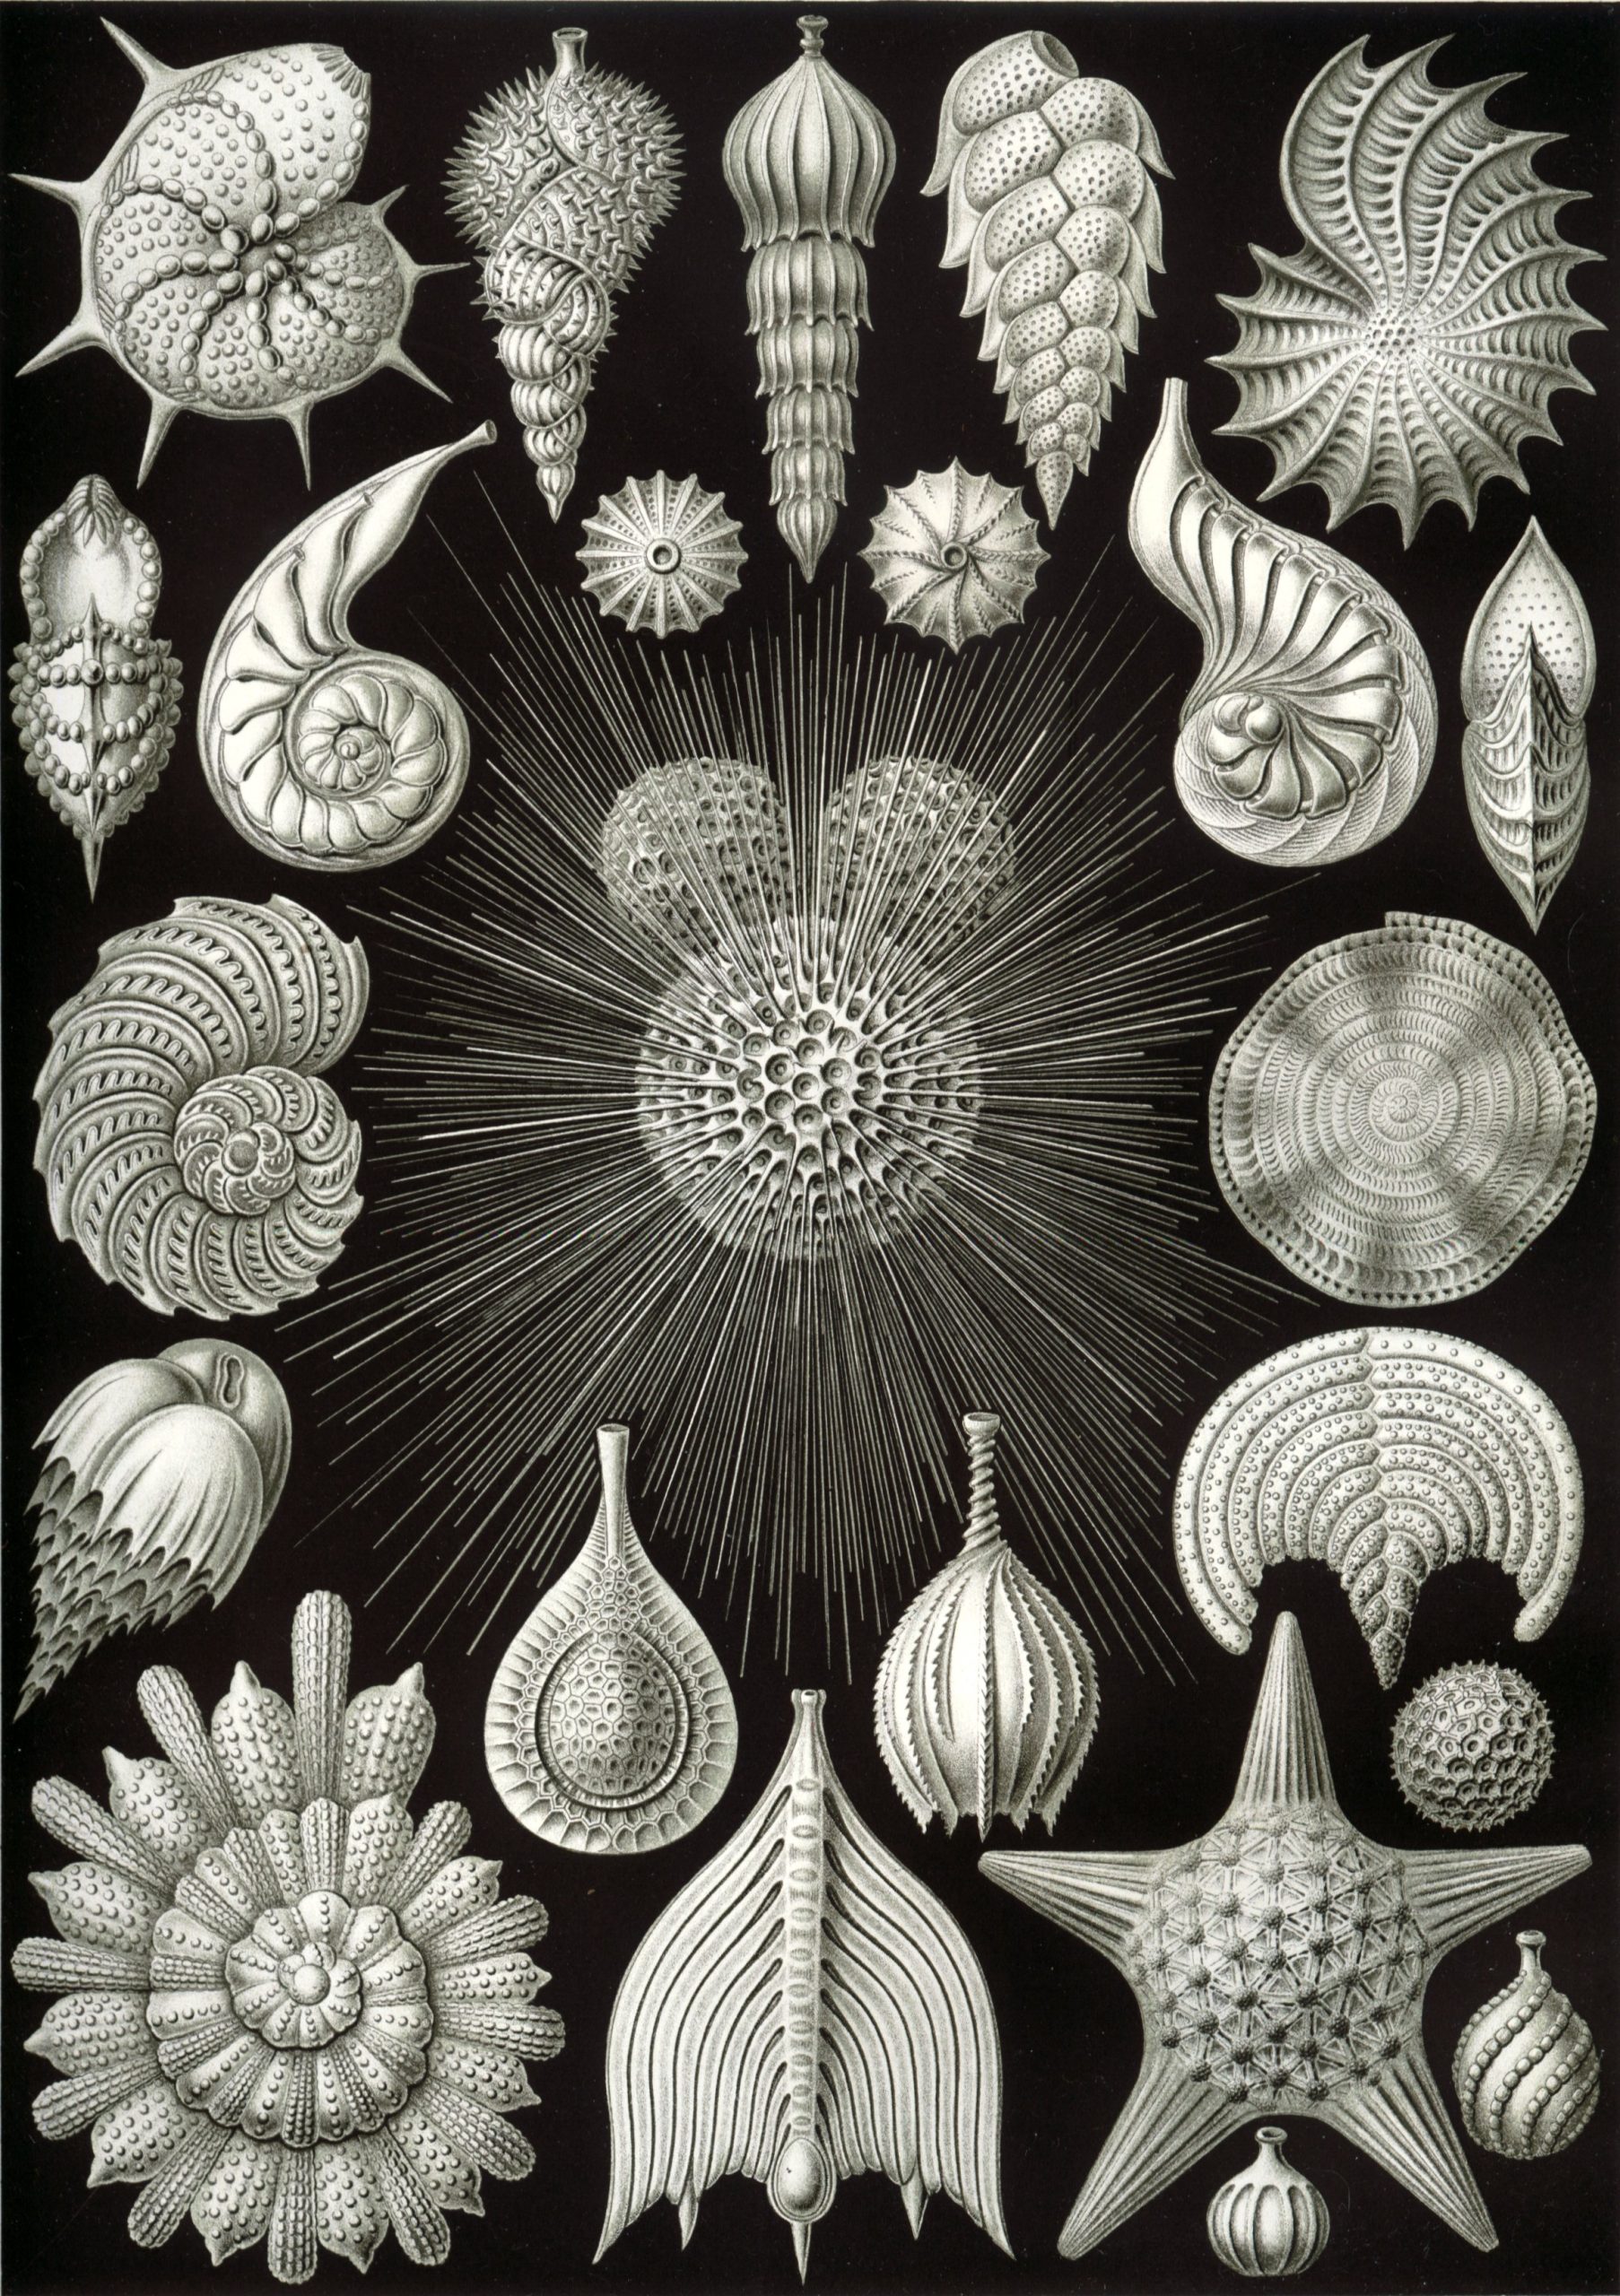 A scientific illustration of various sea shells